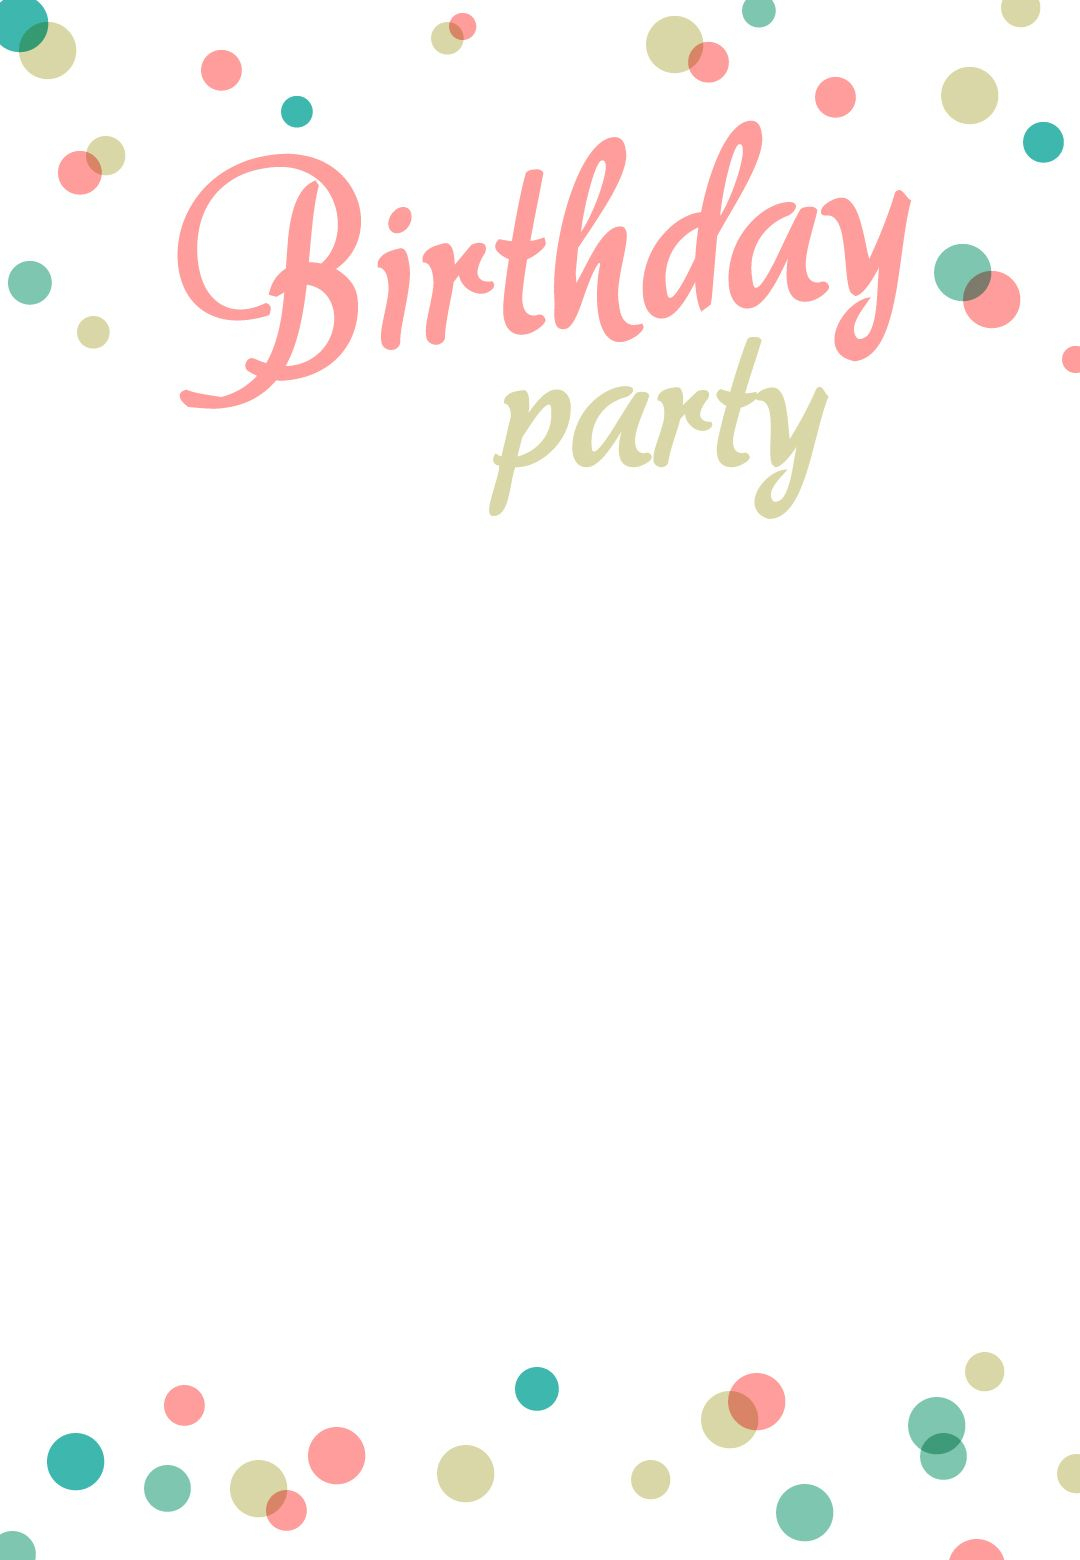 Birthday Party #invitation Free Printable | Party. | Pinterest - Free Printable Birthday Invitations Pinterest